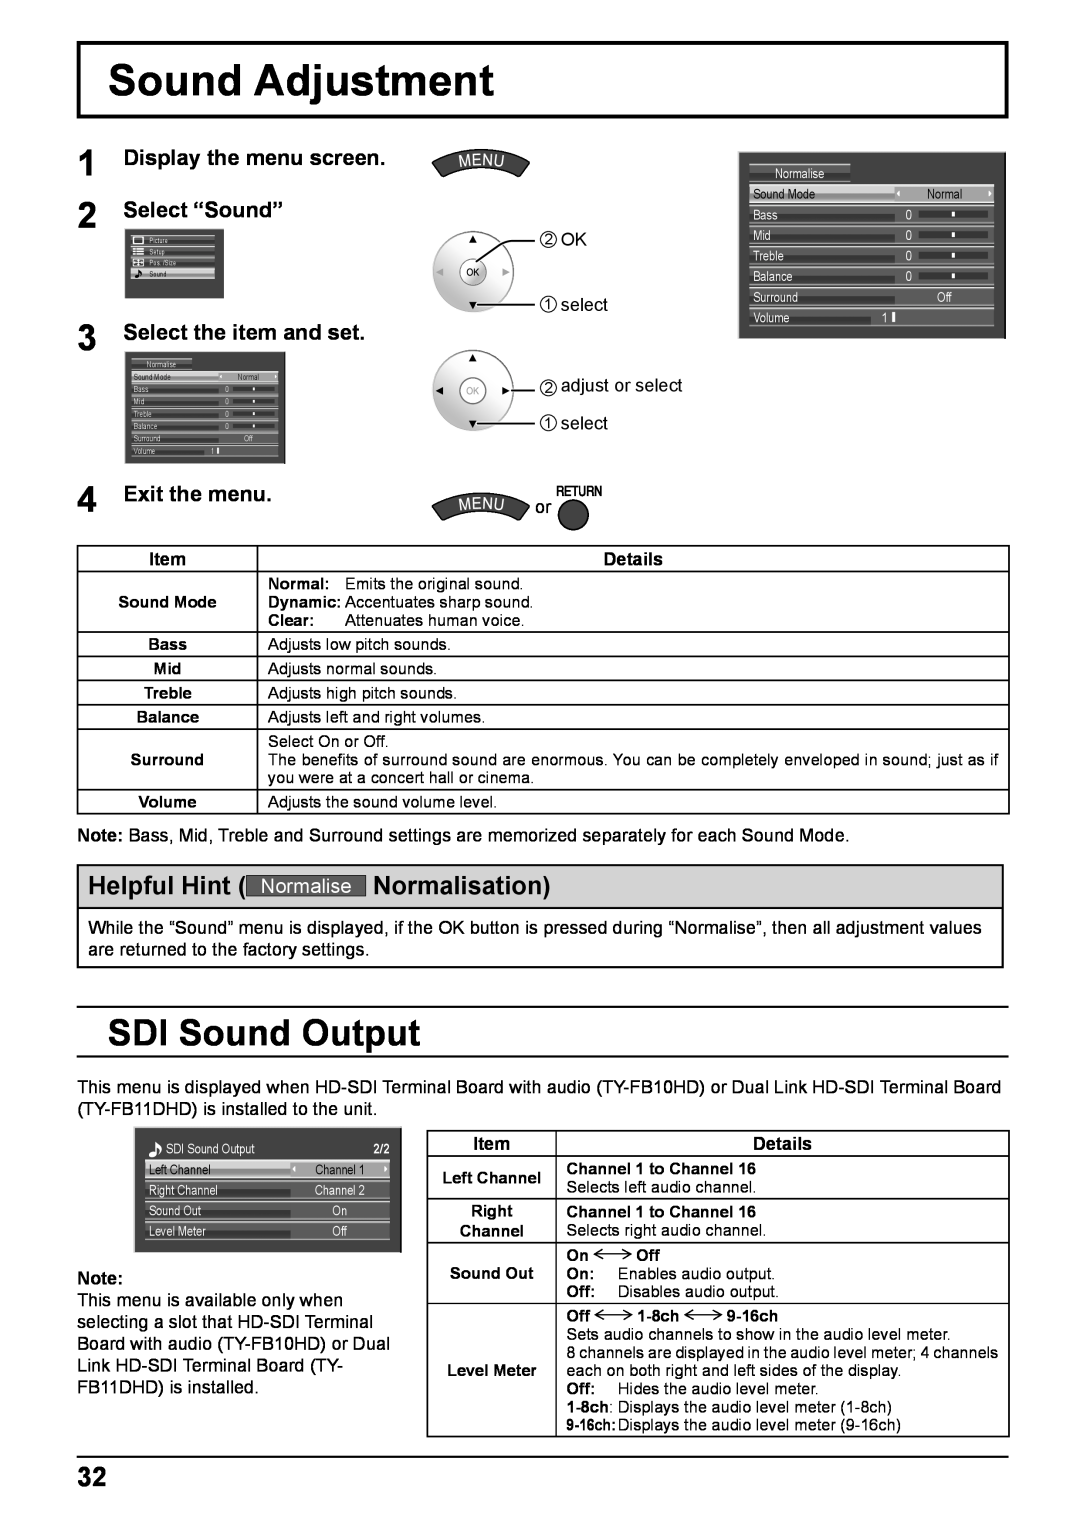 Panasonic TH-65VX100E Sound Adjustment, SDI Sound Output, Normalisation, Display the menu screen. Select “Sound”, Details 